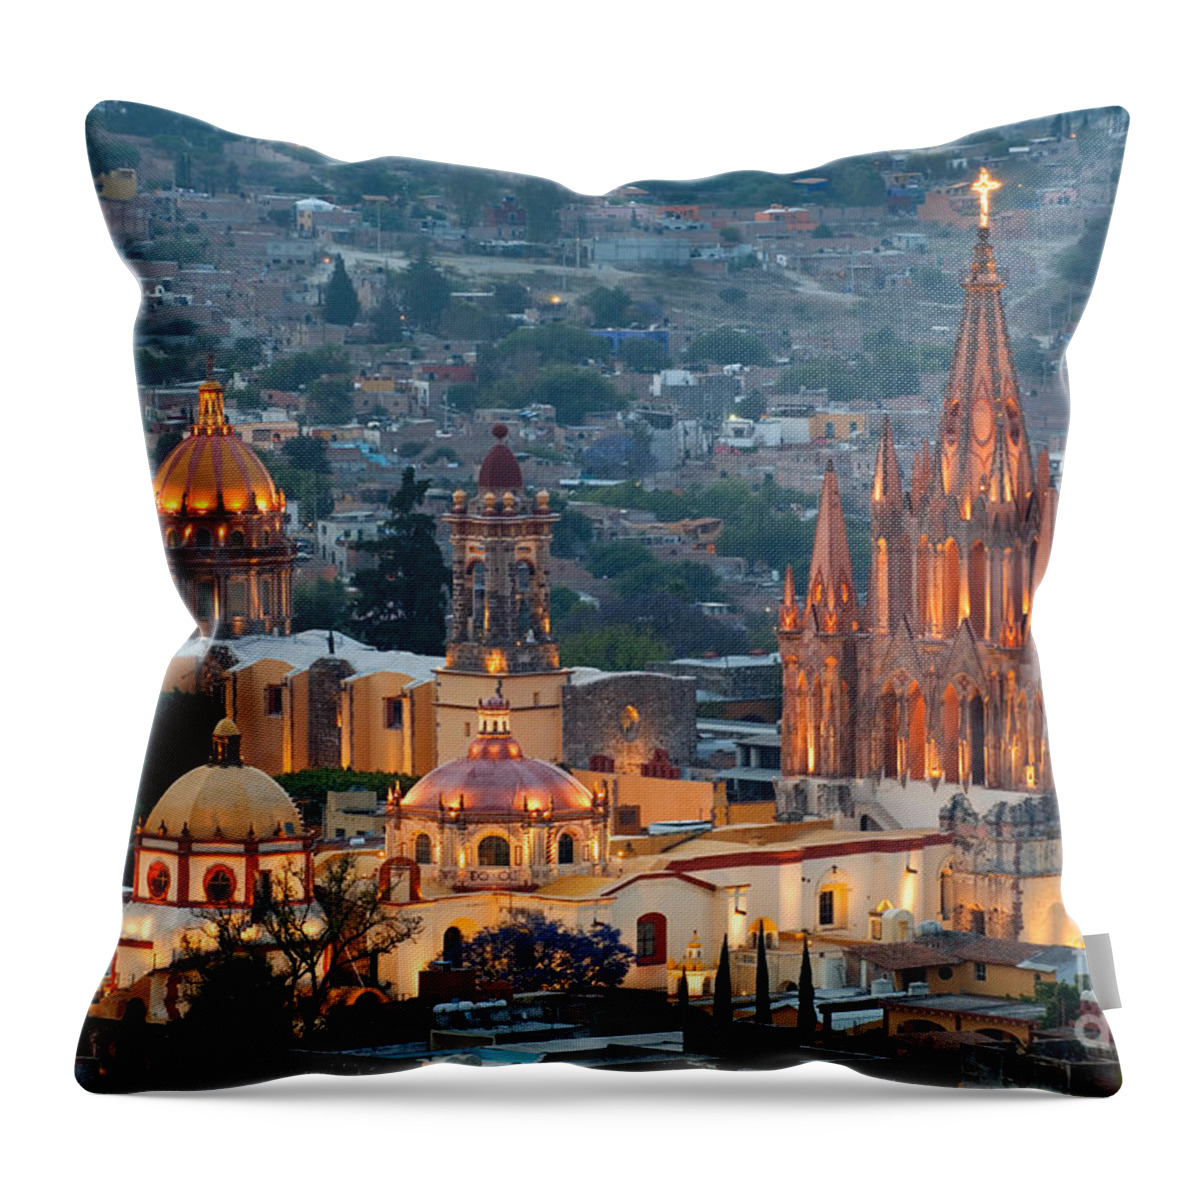 San Miguel De Allende Throw Pillow featuring the photograph San Miguel De Allende, Mexico by John Shaw